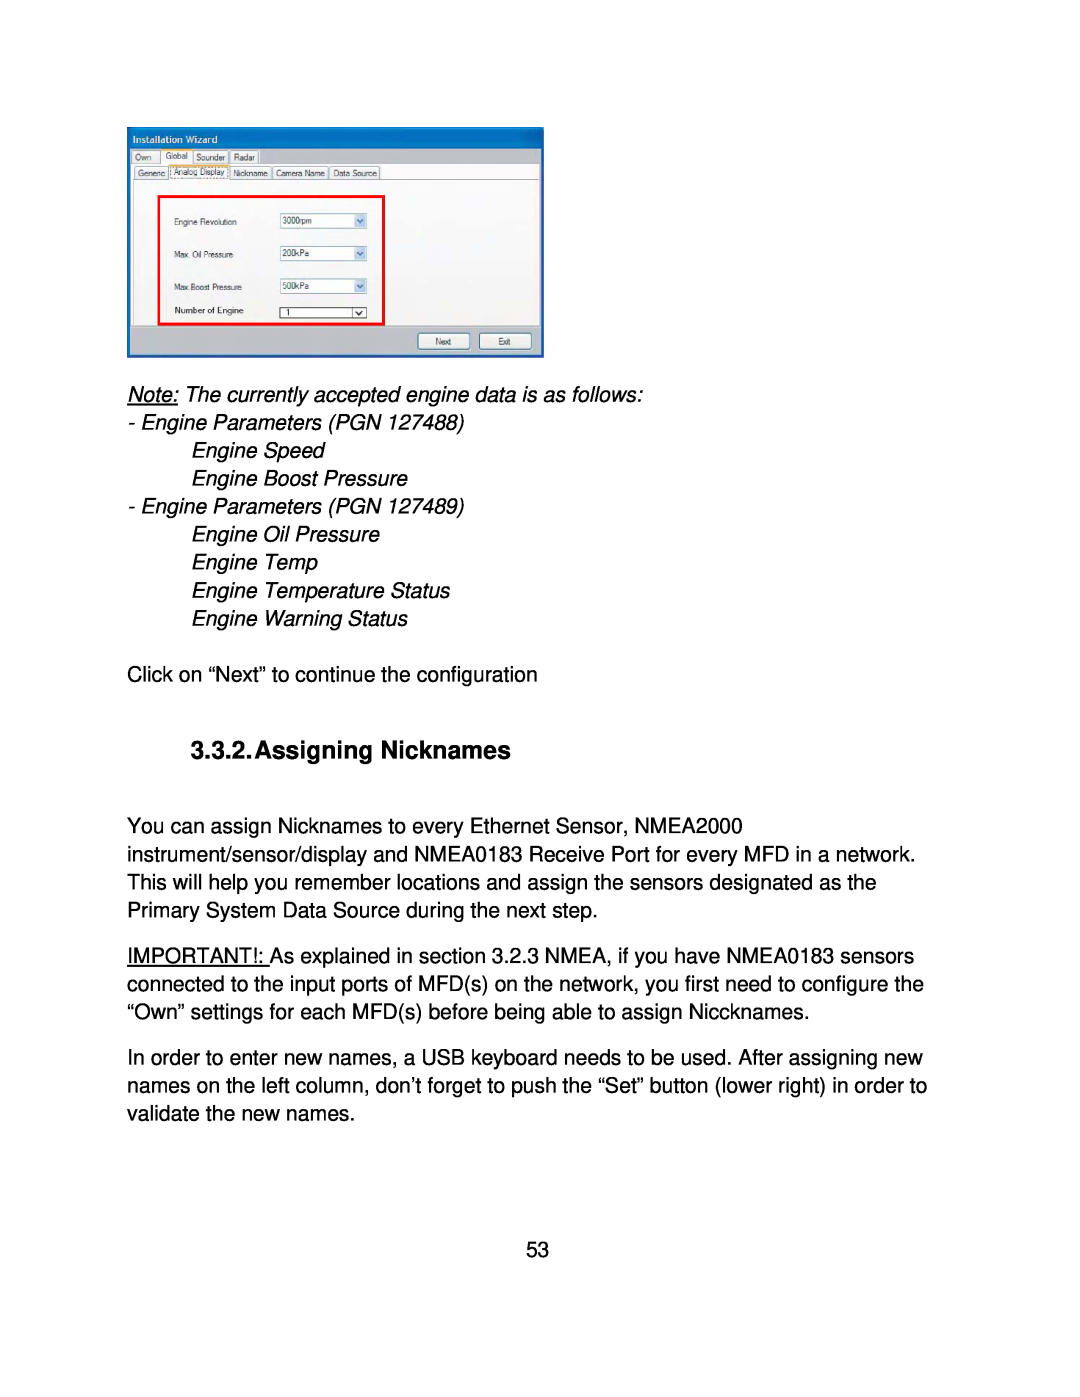 Furuno MFD8/12/BB manual Assigning Nicknames, Engine Parameters PGN 127488 Engine Speed, Engine Boost Pressure 